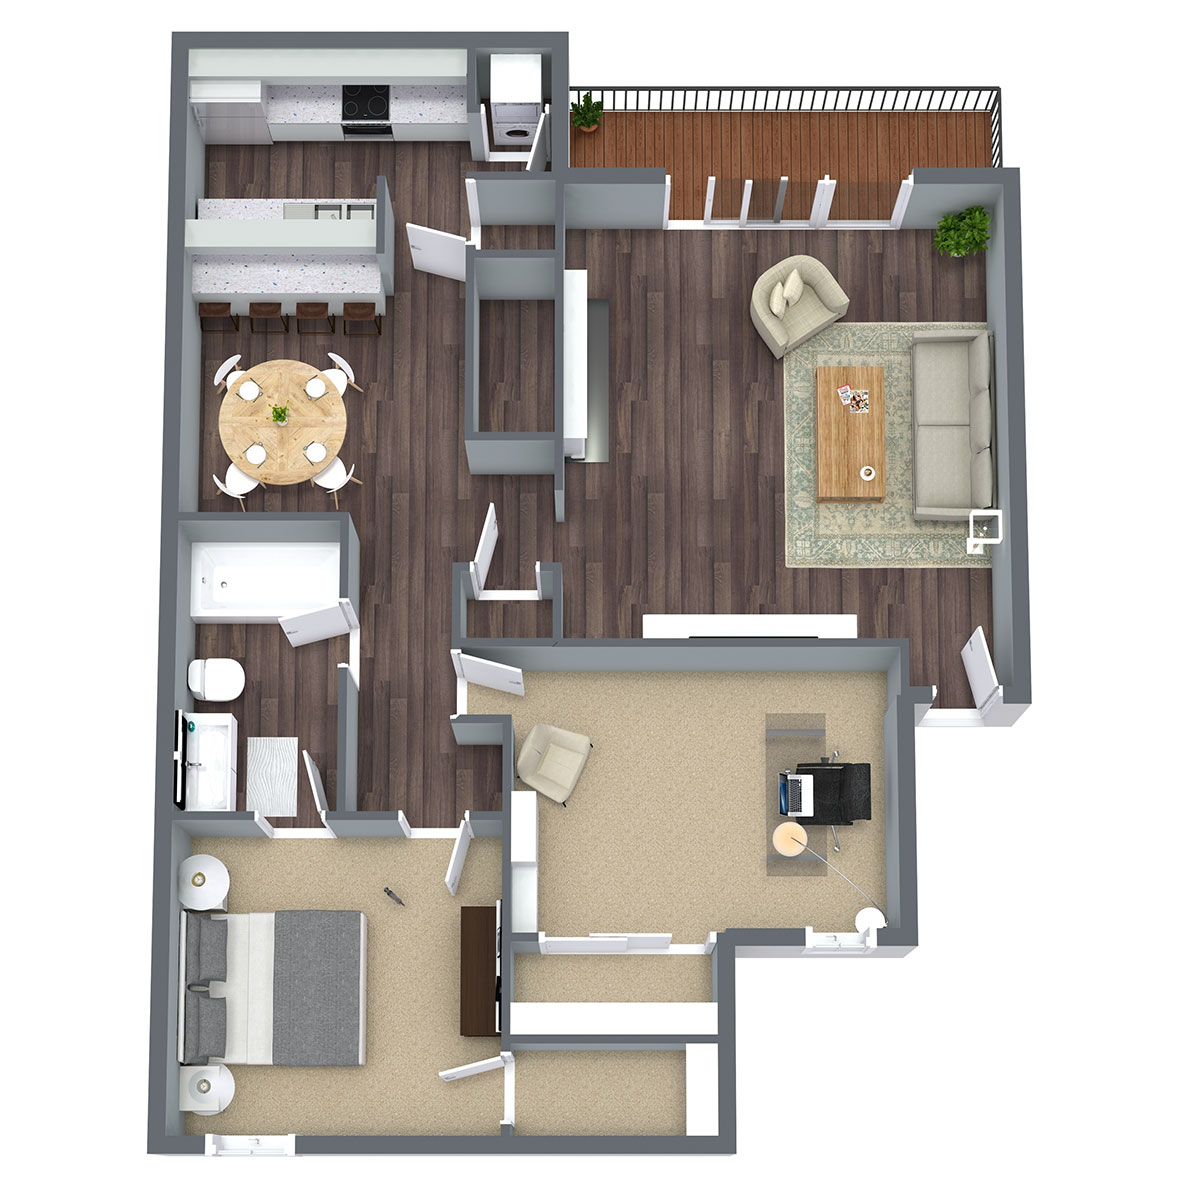 Rock Island Apartments Floorplan 7